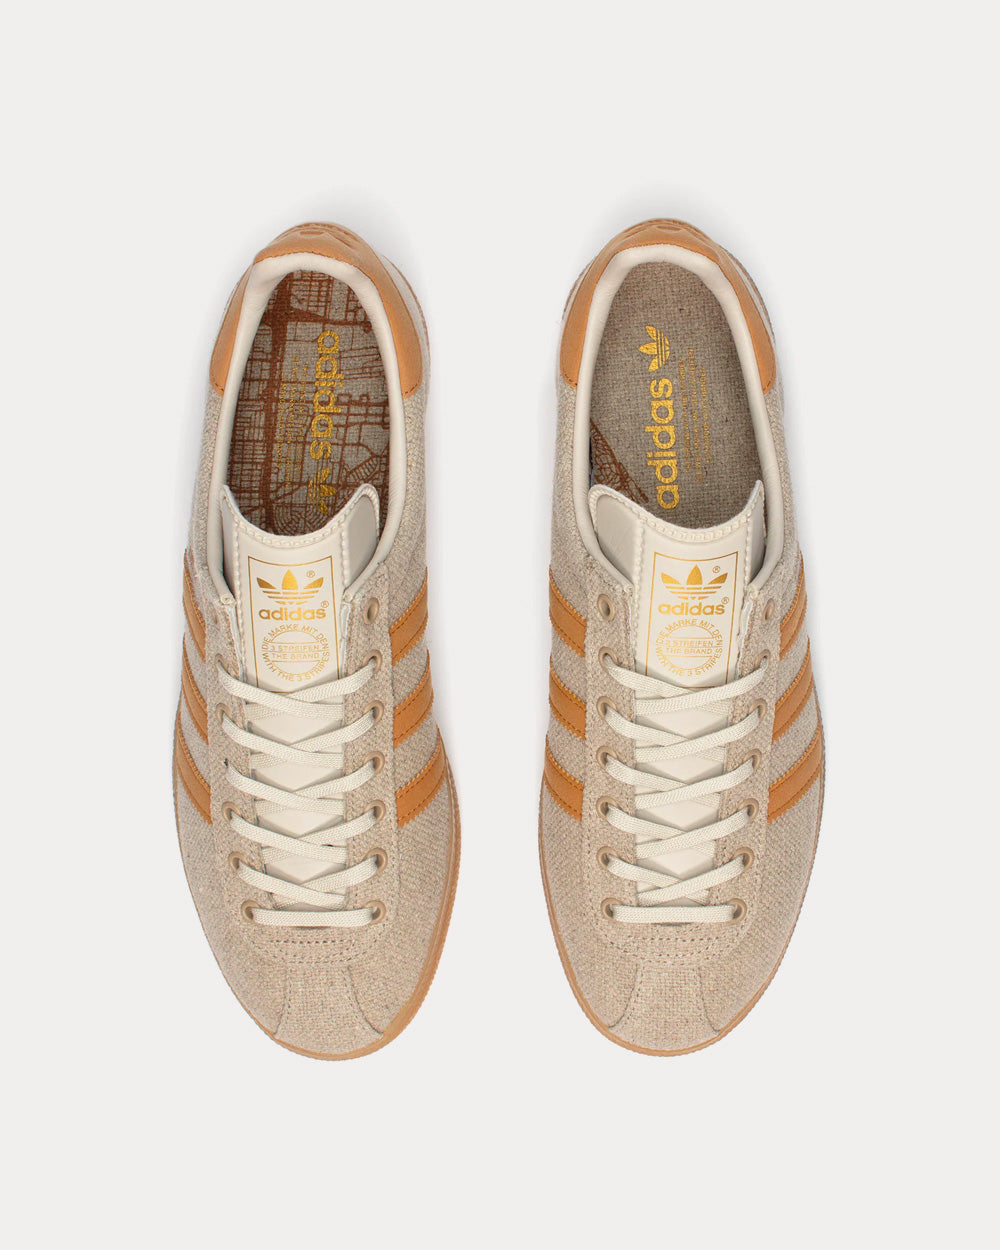 Adidas x SNS GT LA Brown/ Mesa / Gold Low Top Sneakers - Sneak in Peace